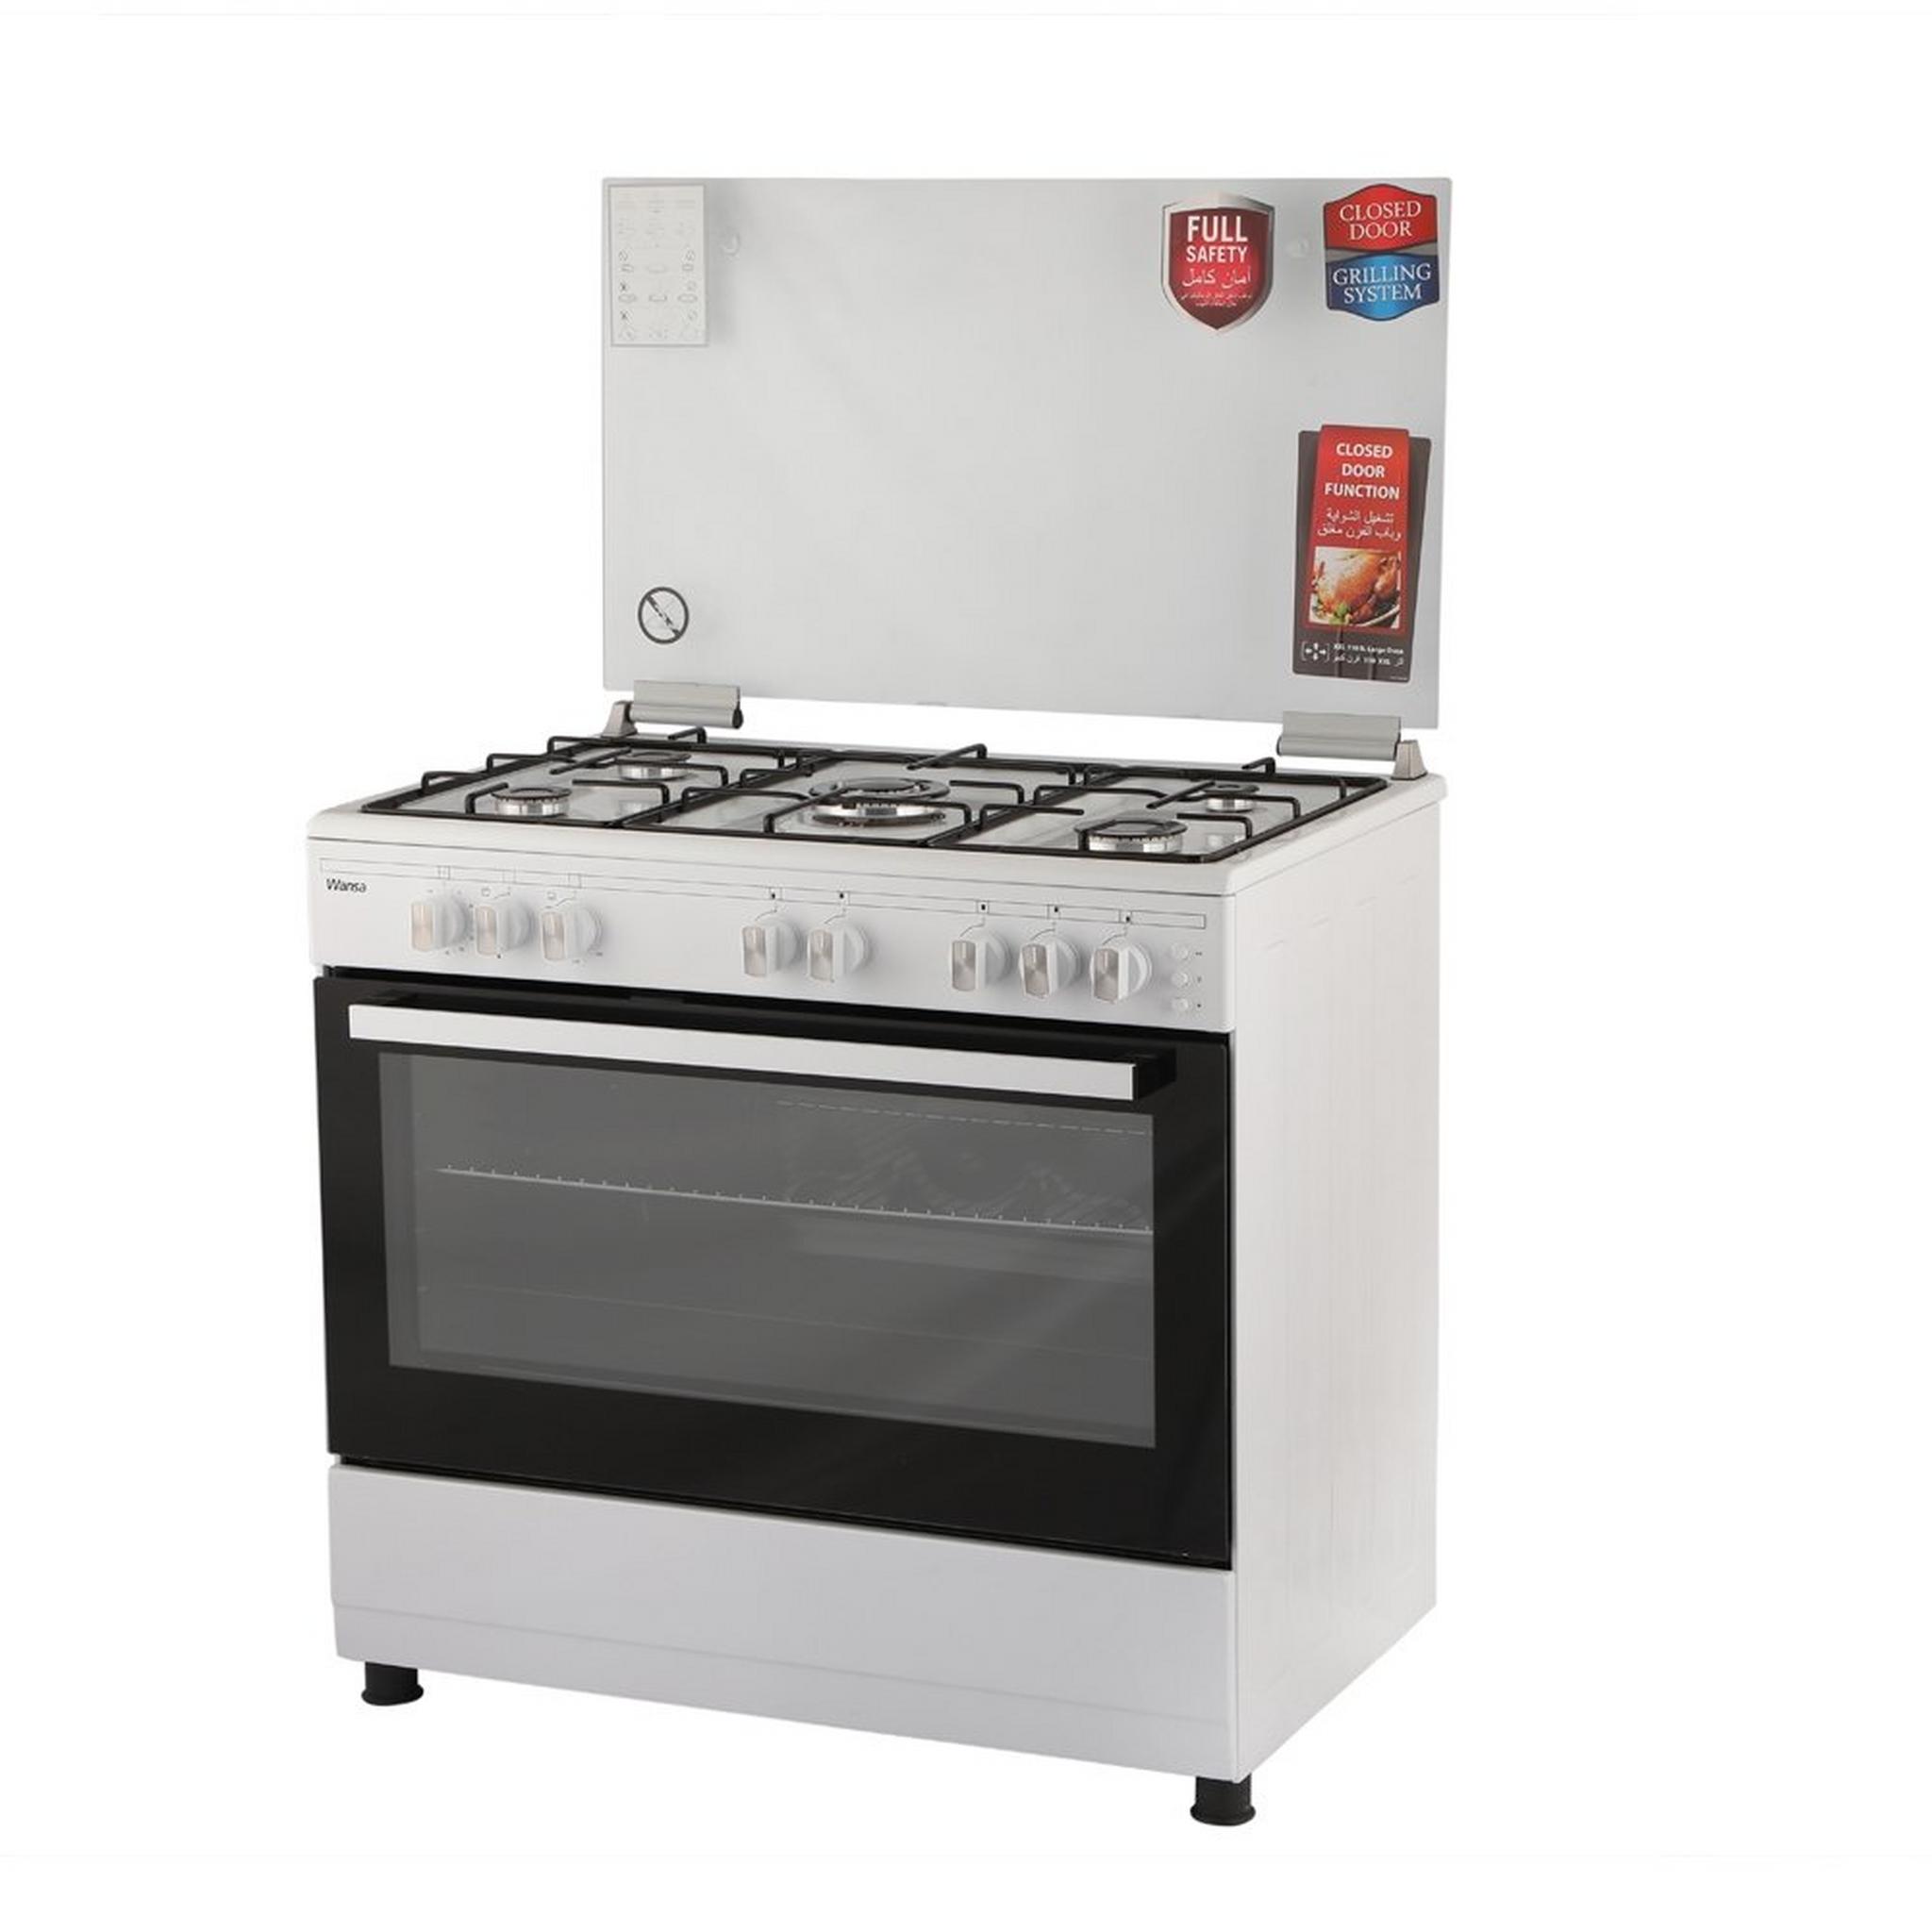 Wansa 90x60cm 5 Burners Free Standing Gas Cooker (WCT9502124W) – White